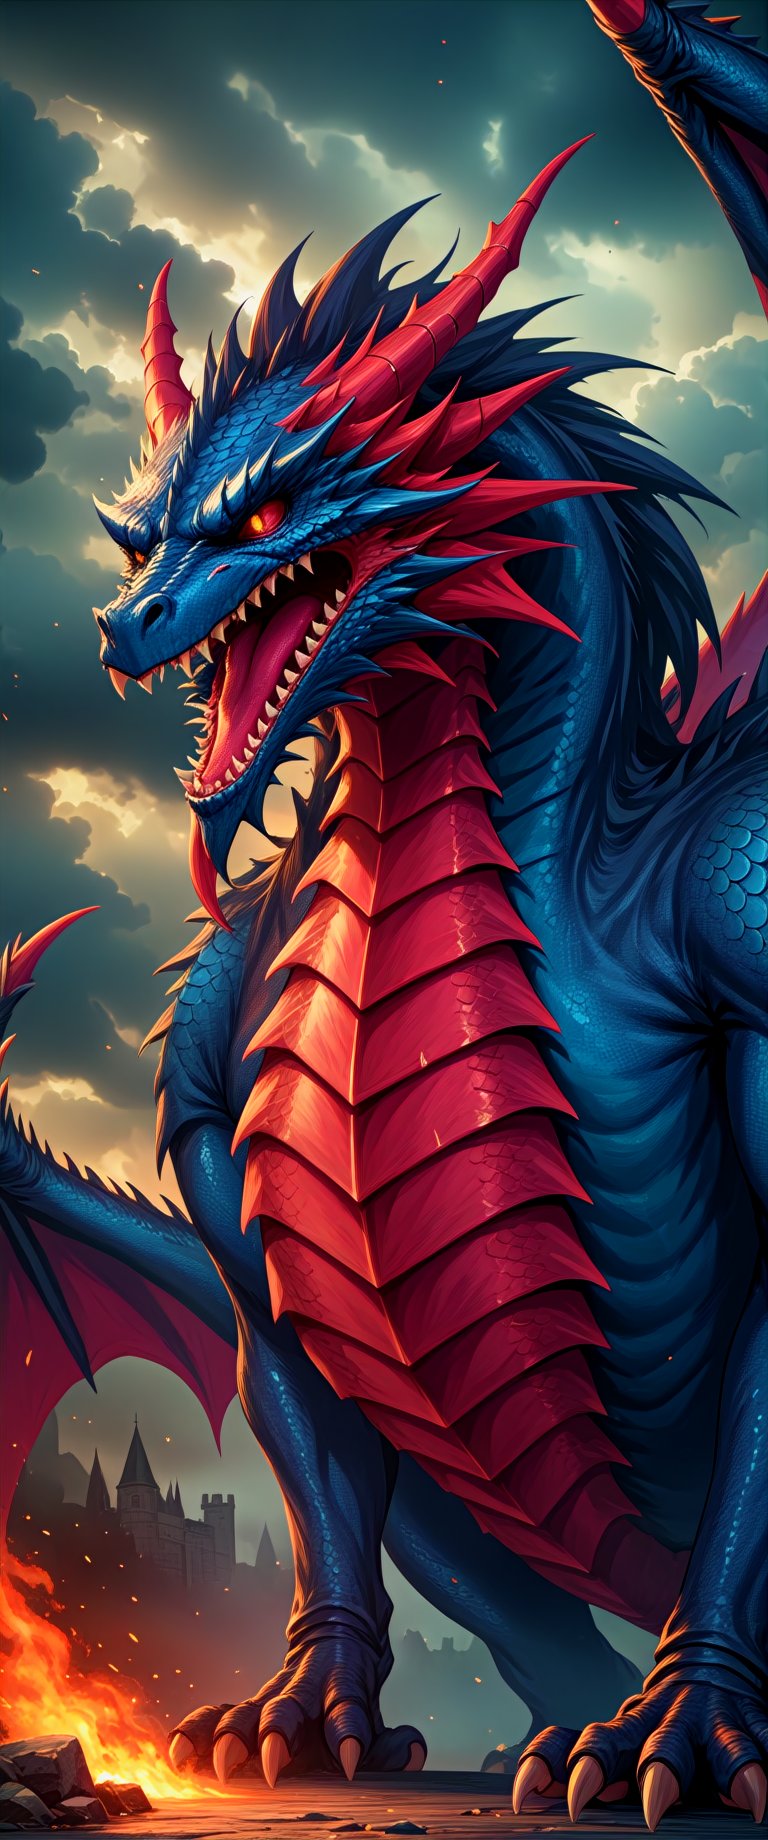 Angry fierce dragon,,darkart,,,DonMn1ghtm4reXL,,skpleonardostyle,<lora:659095807385103906:1.0>,<lora:659095807385103906:1.0>